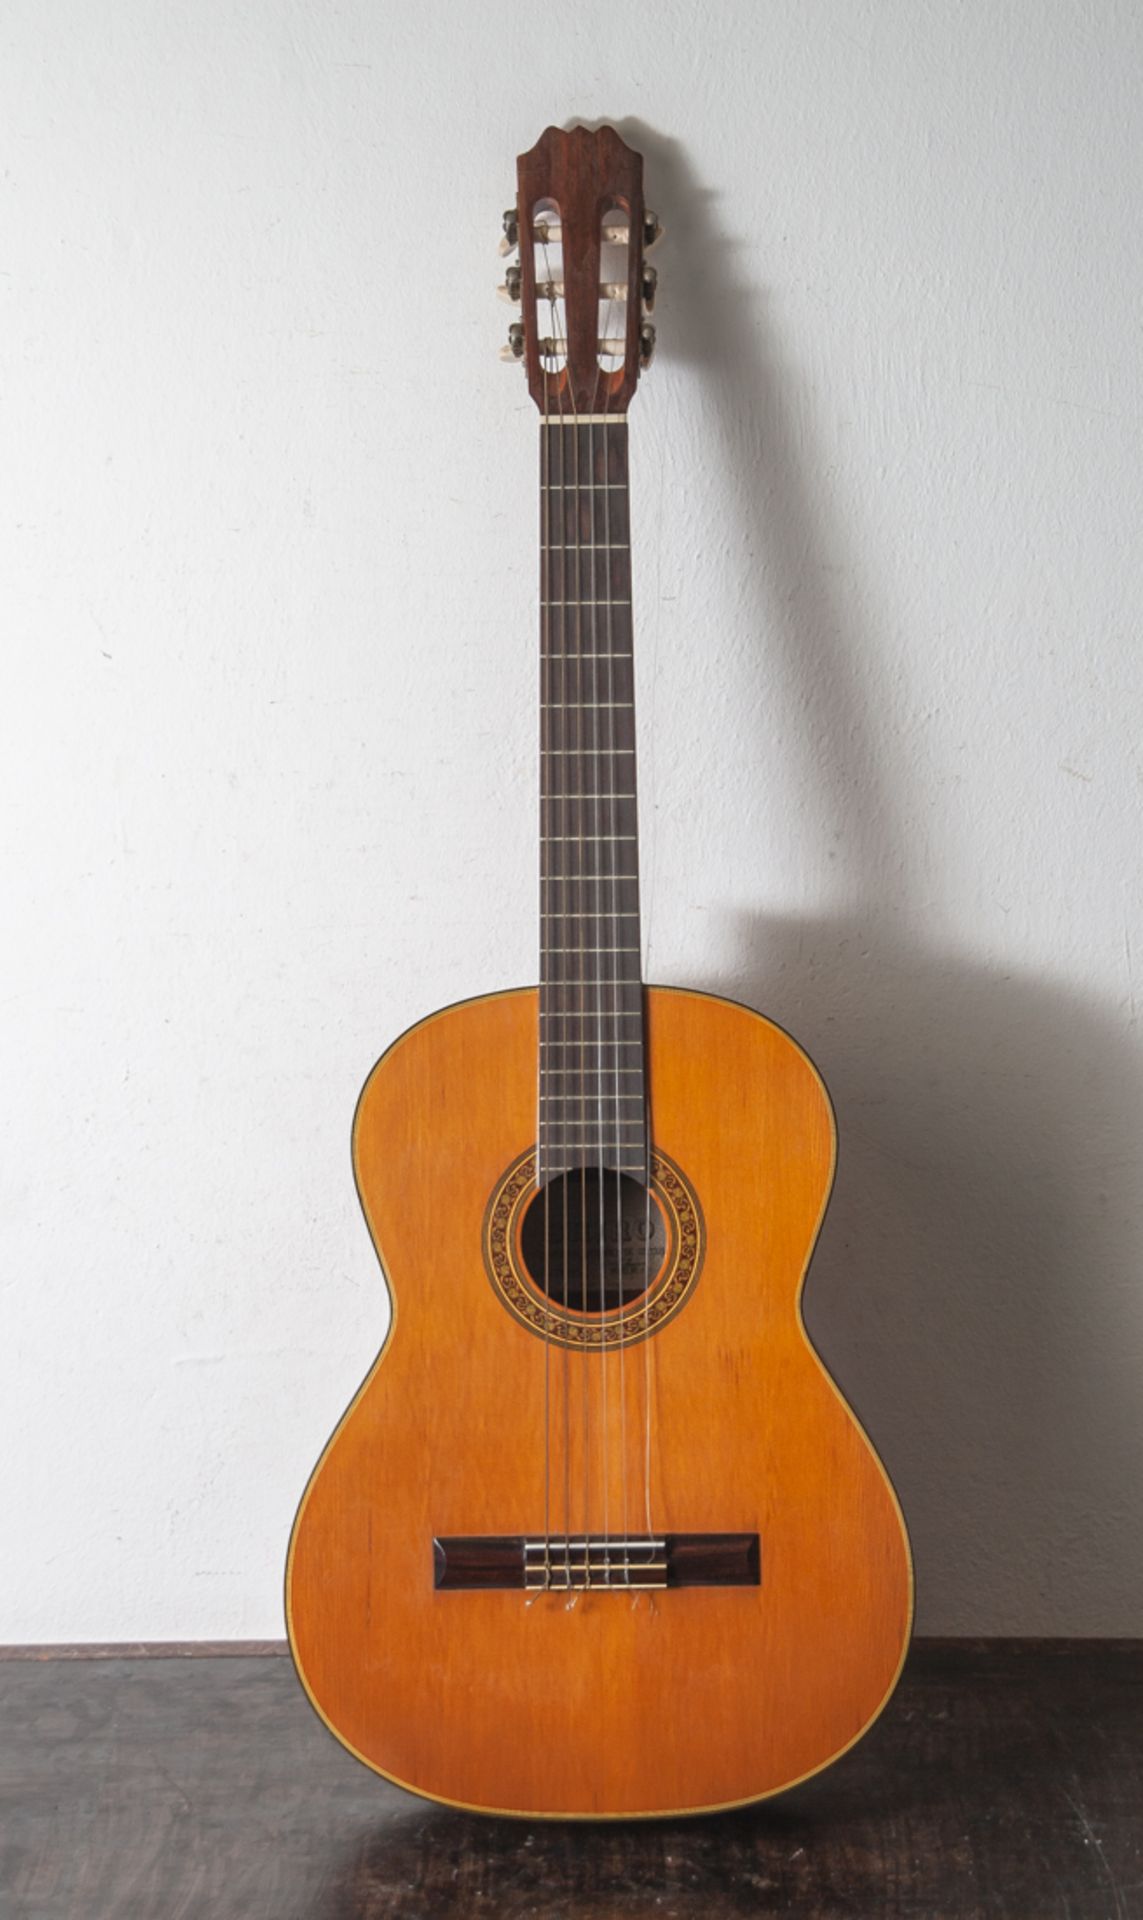 Gitarre, bez Shiro Construccion Artistica de Guitarra Serial No 857, Modello No A-C8, Madein